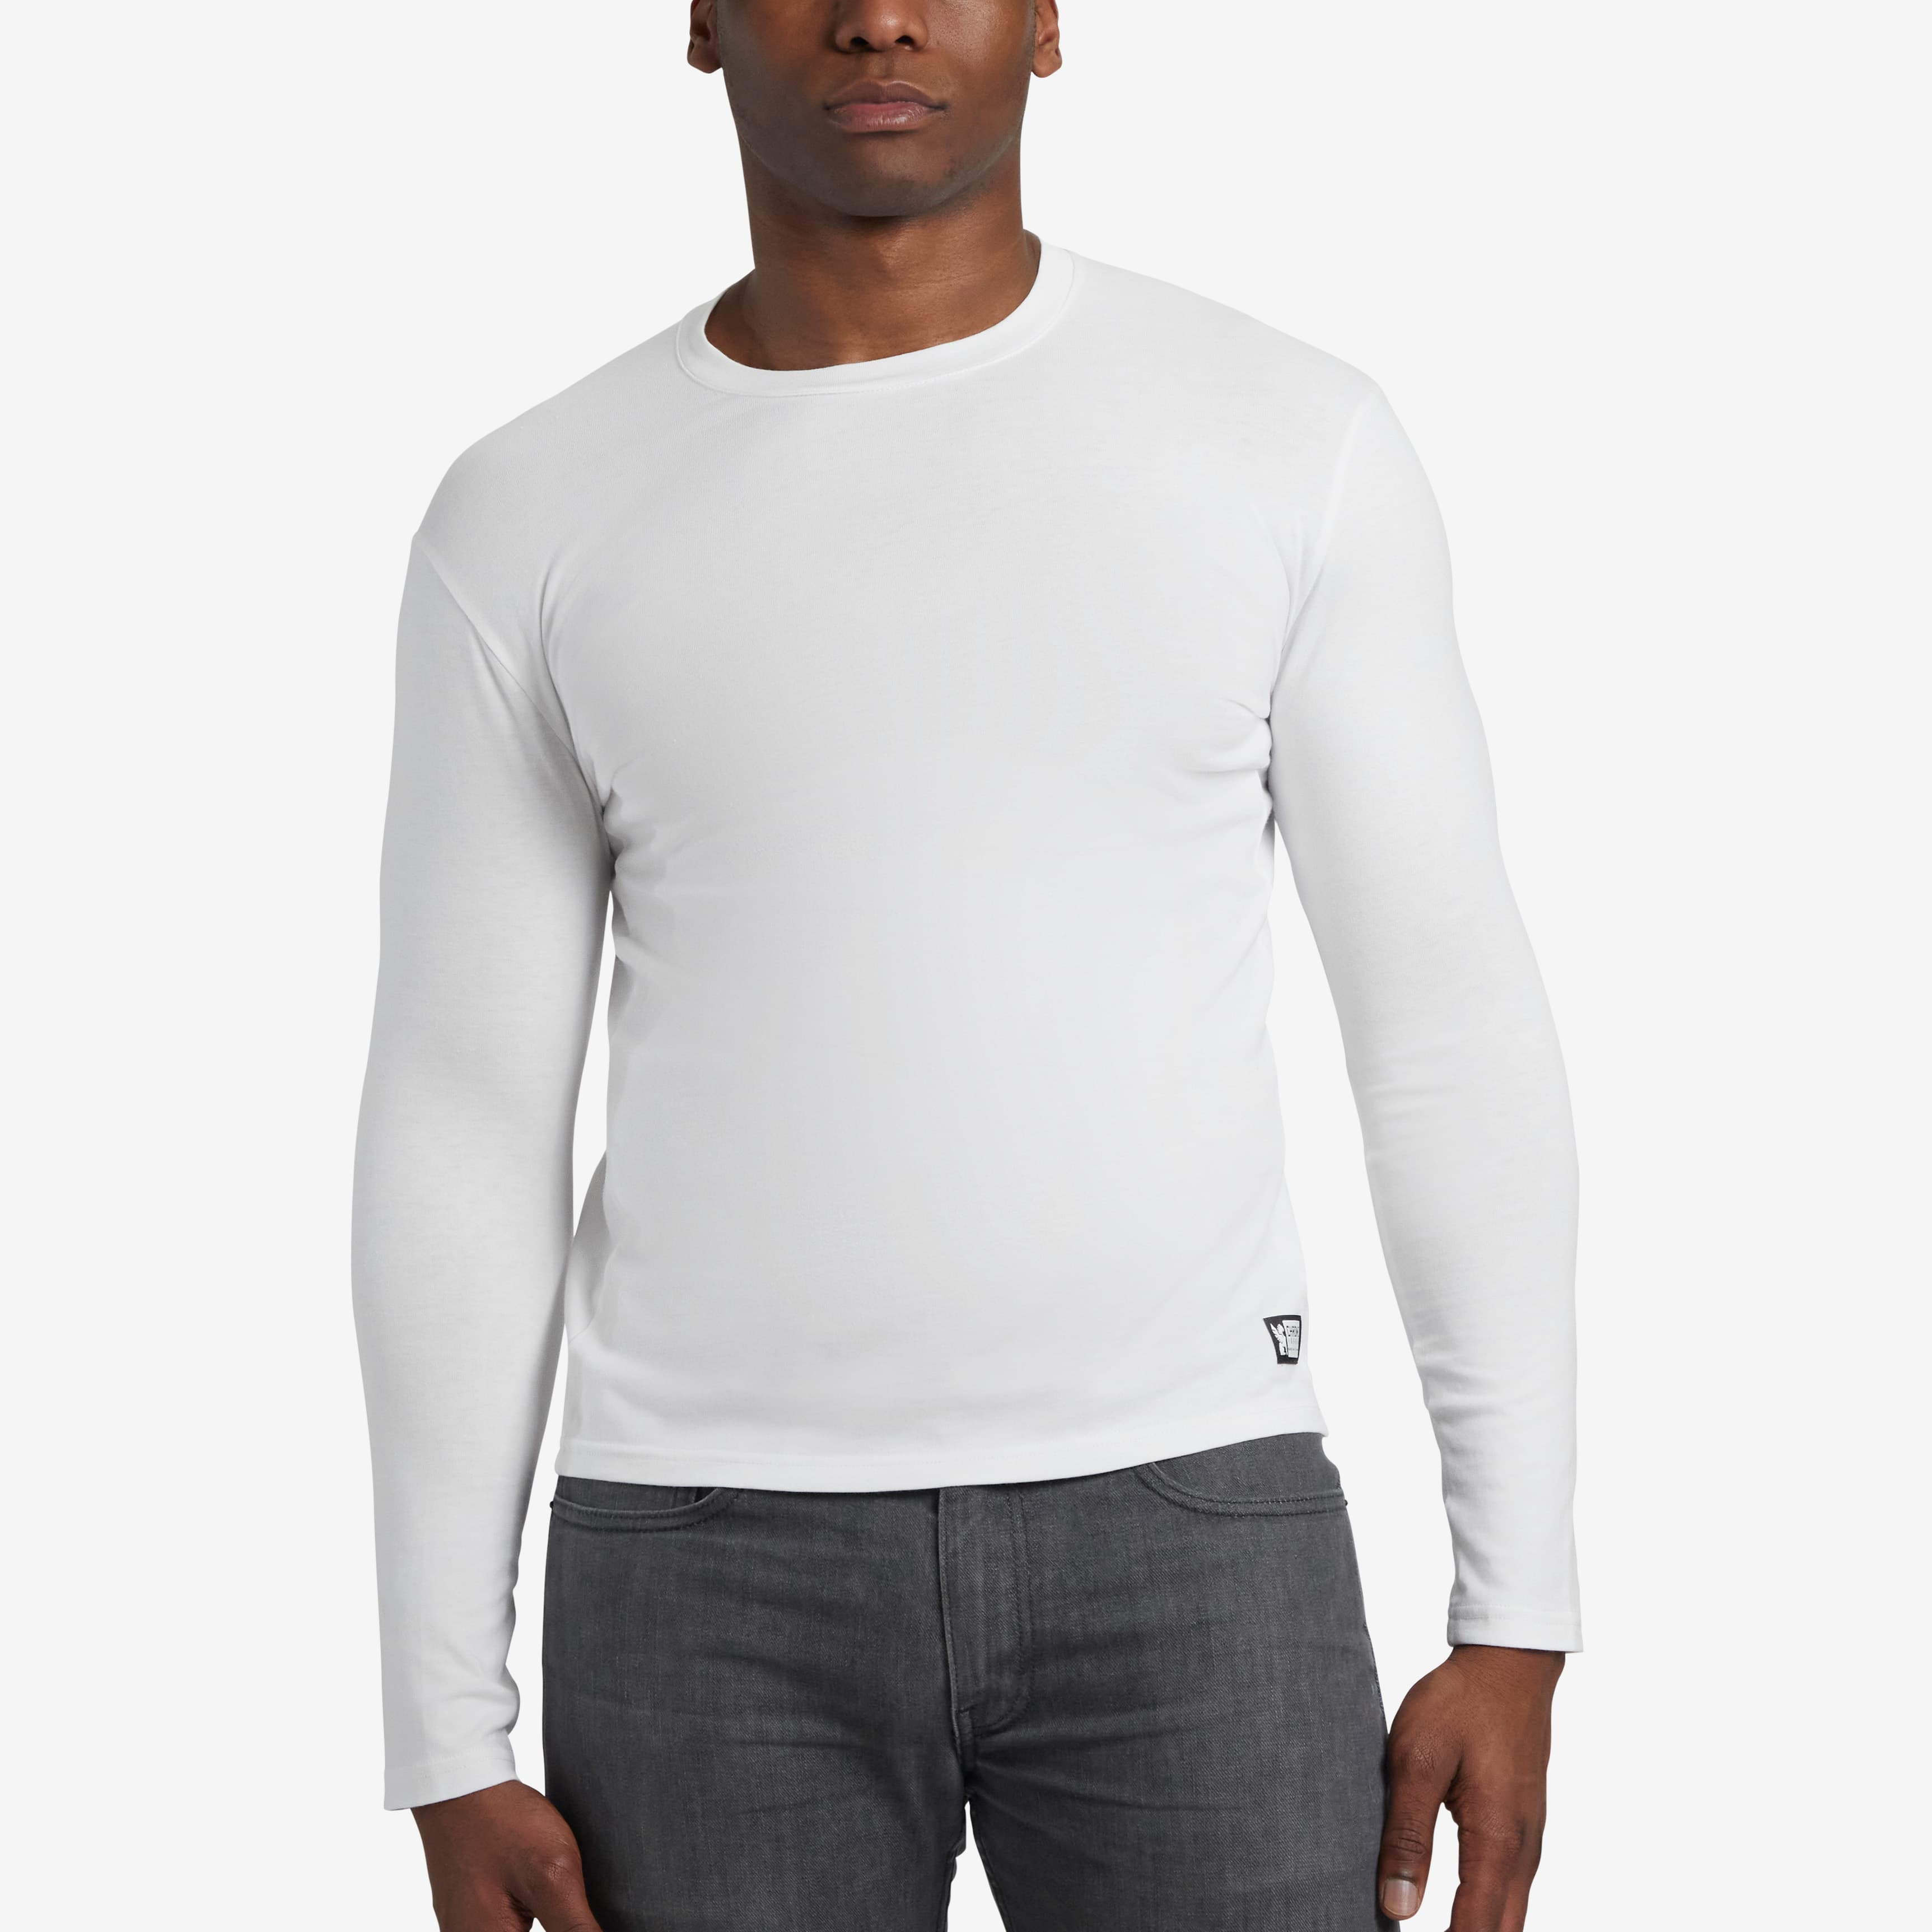 Men's Chrome basics long sleeve T-shirt in white worn by a man #color_white